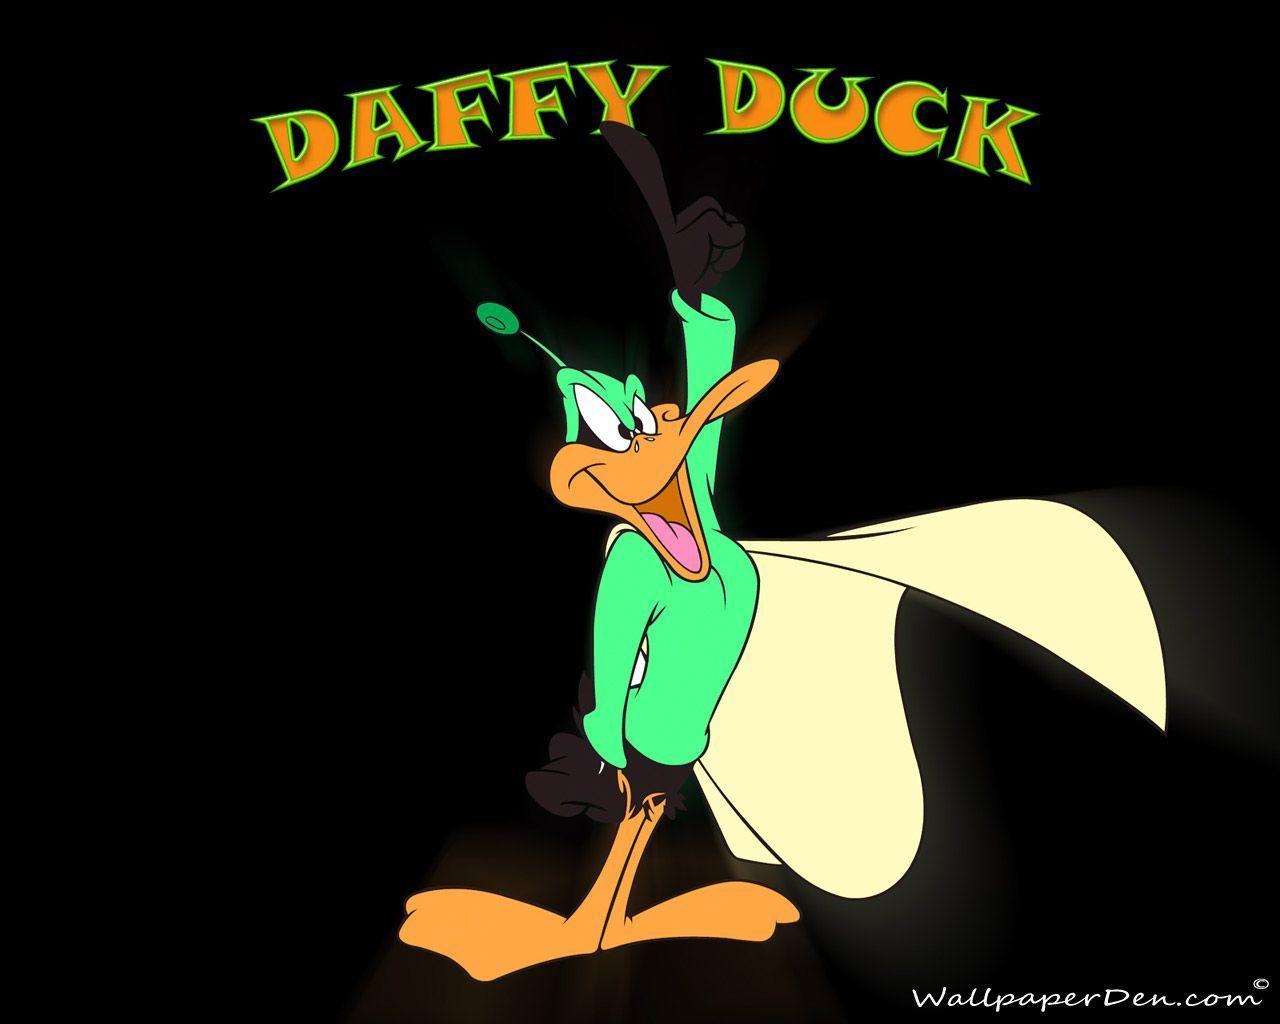 Bugs Bunny vs Daffy Duck Wallpaper HD Wallpaper